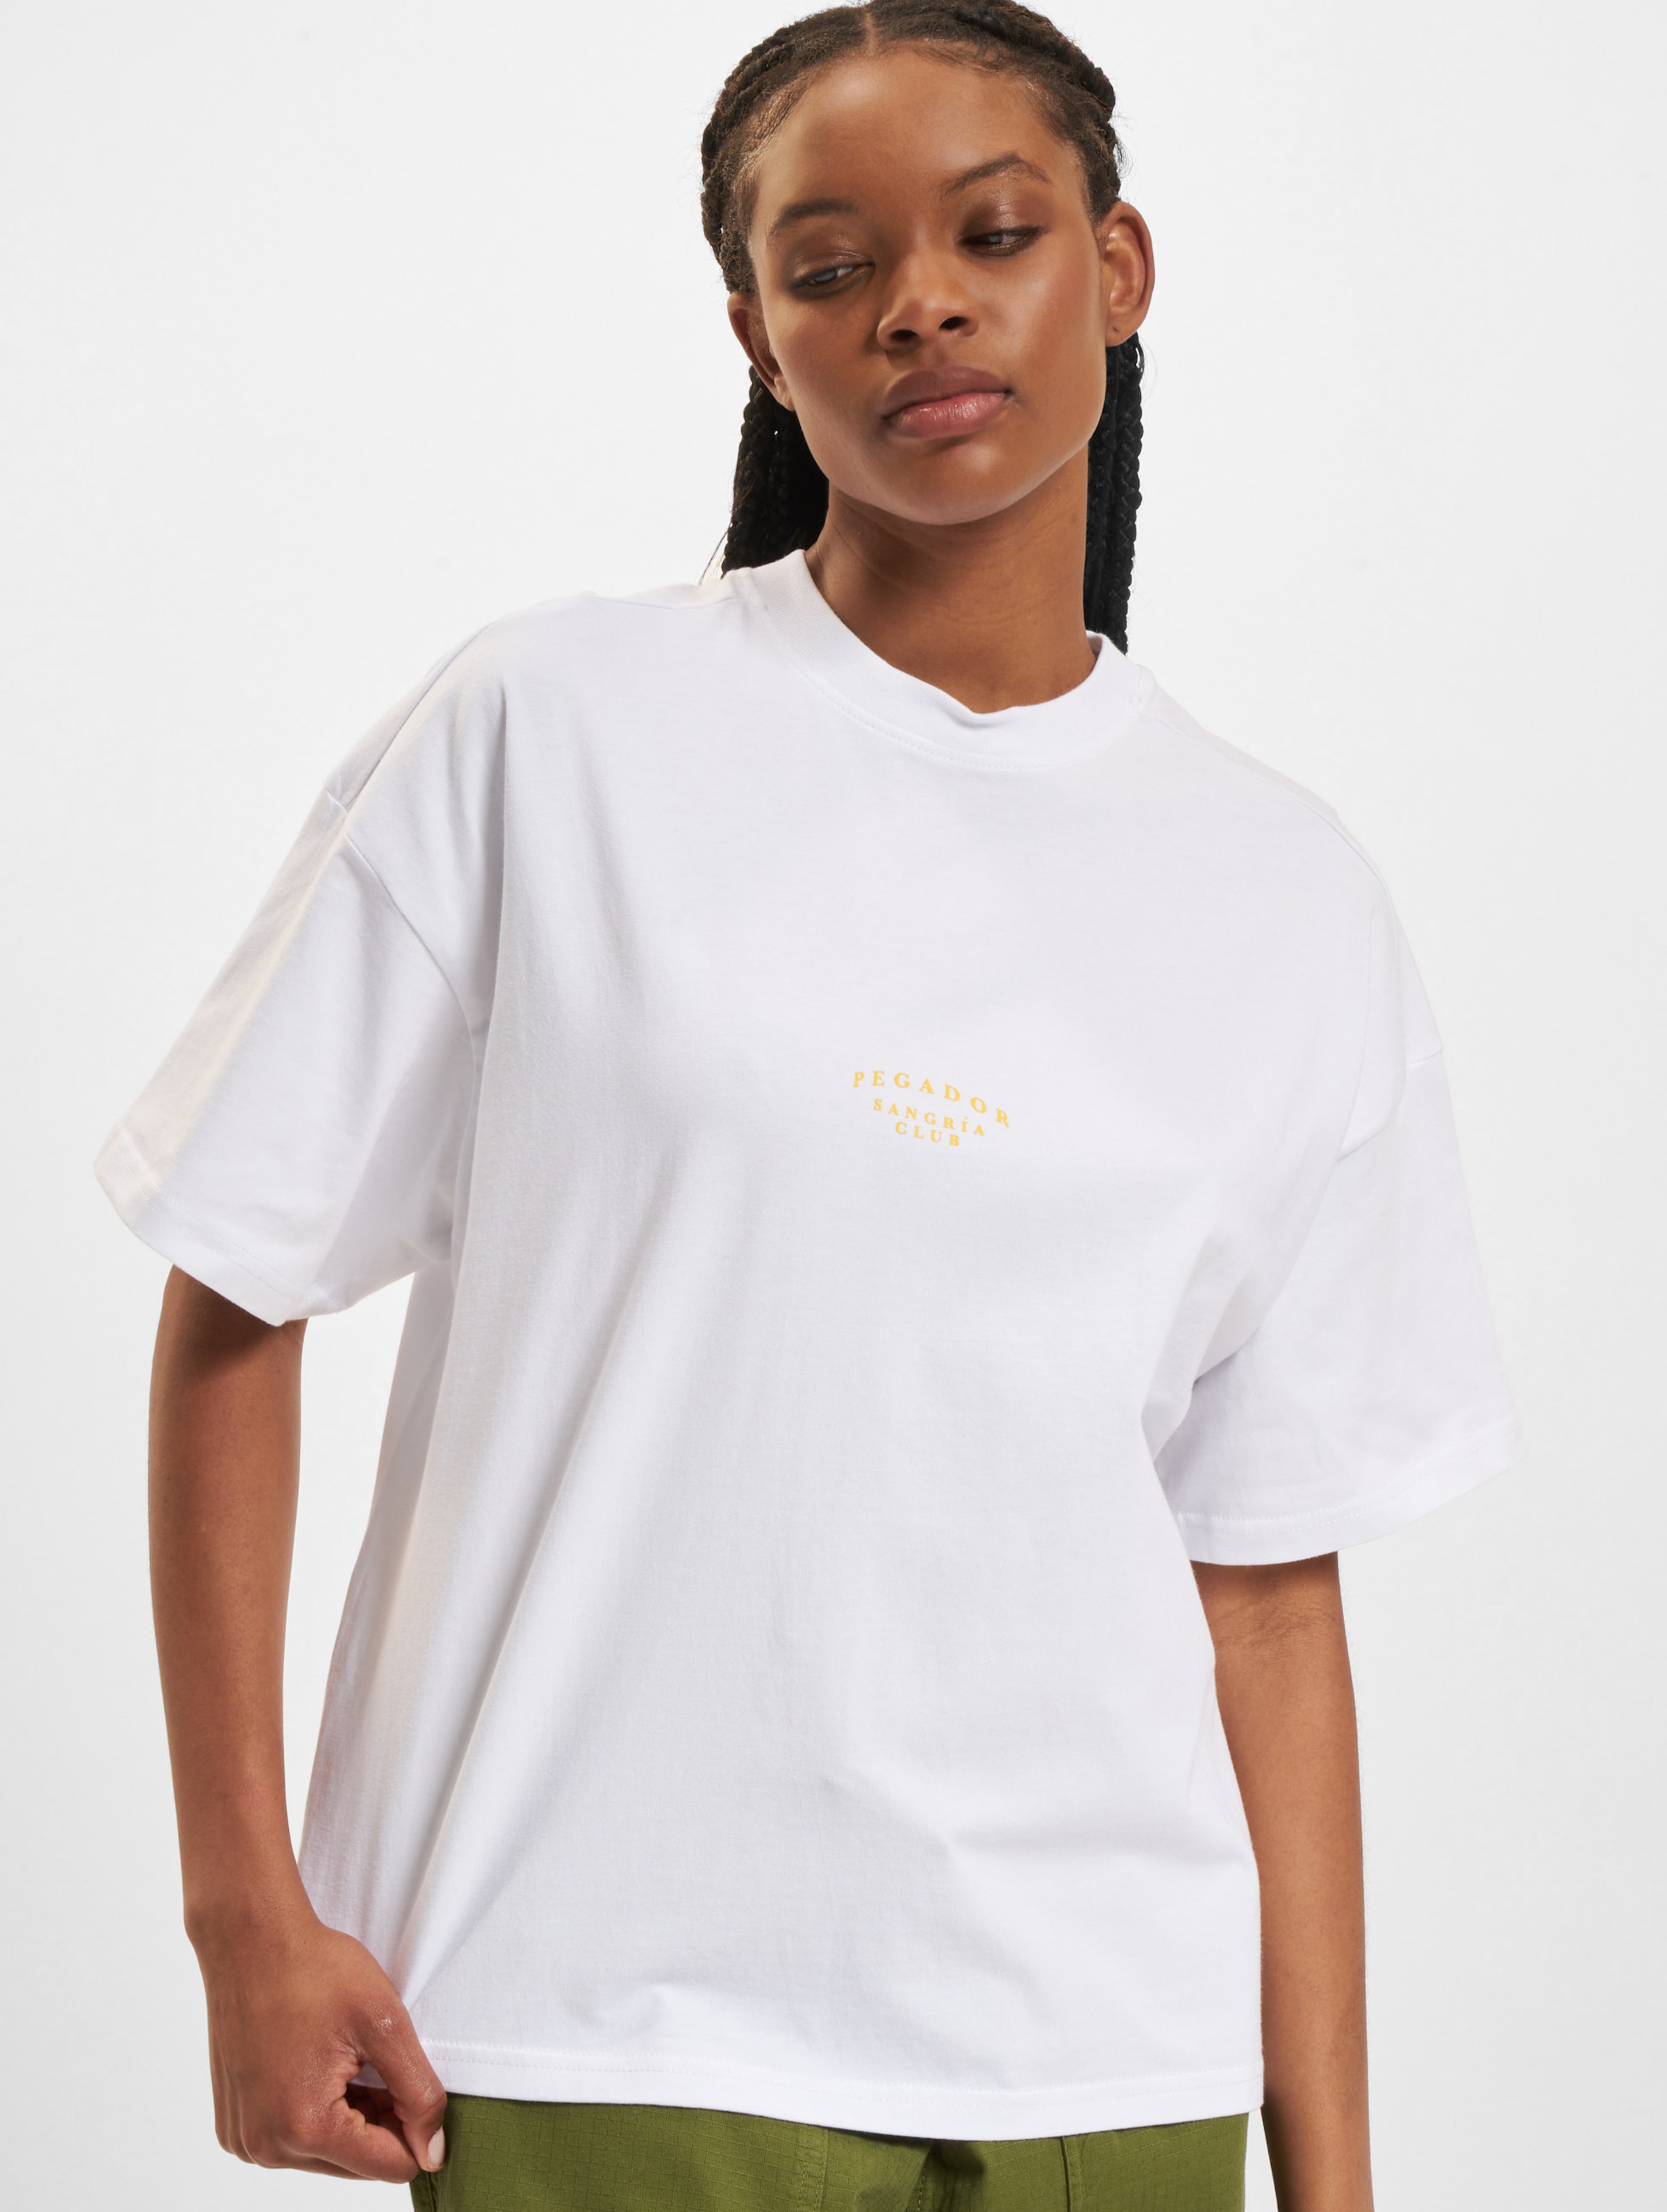 PEGADOR Pelo Heavy Oversized T-Shirts Frauen,Unisex op kleur wit, Maat S